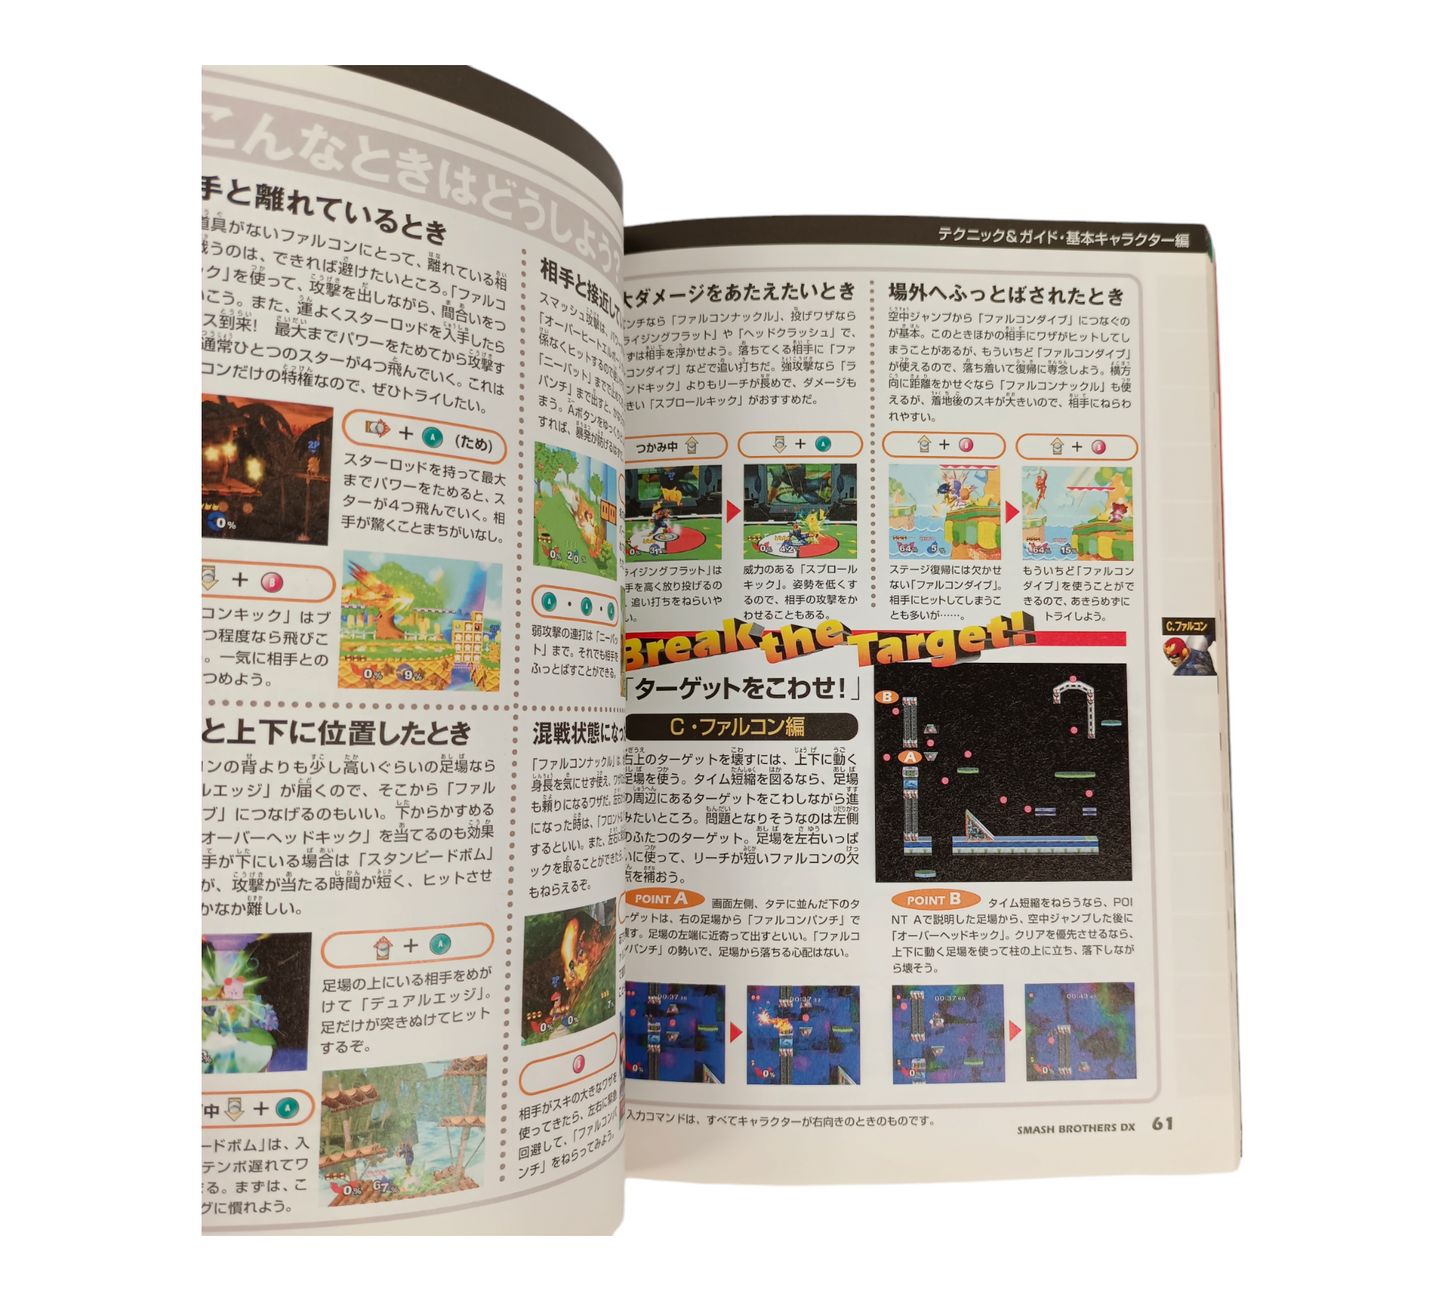 Guide officiel Nintendo pour Super Smash Bros. Melee